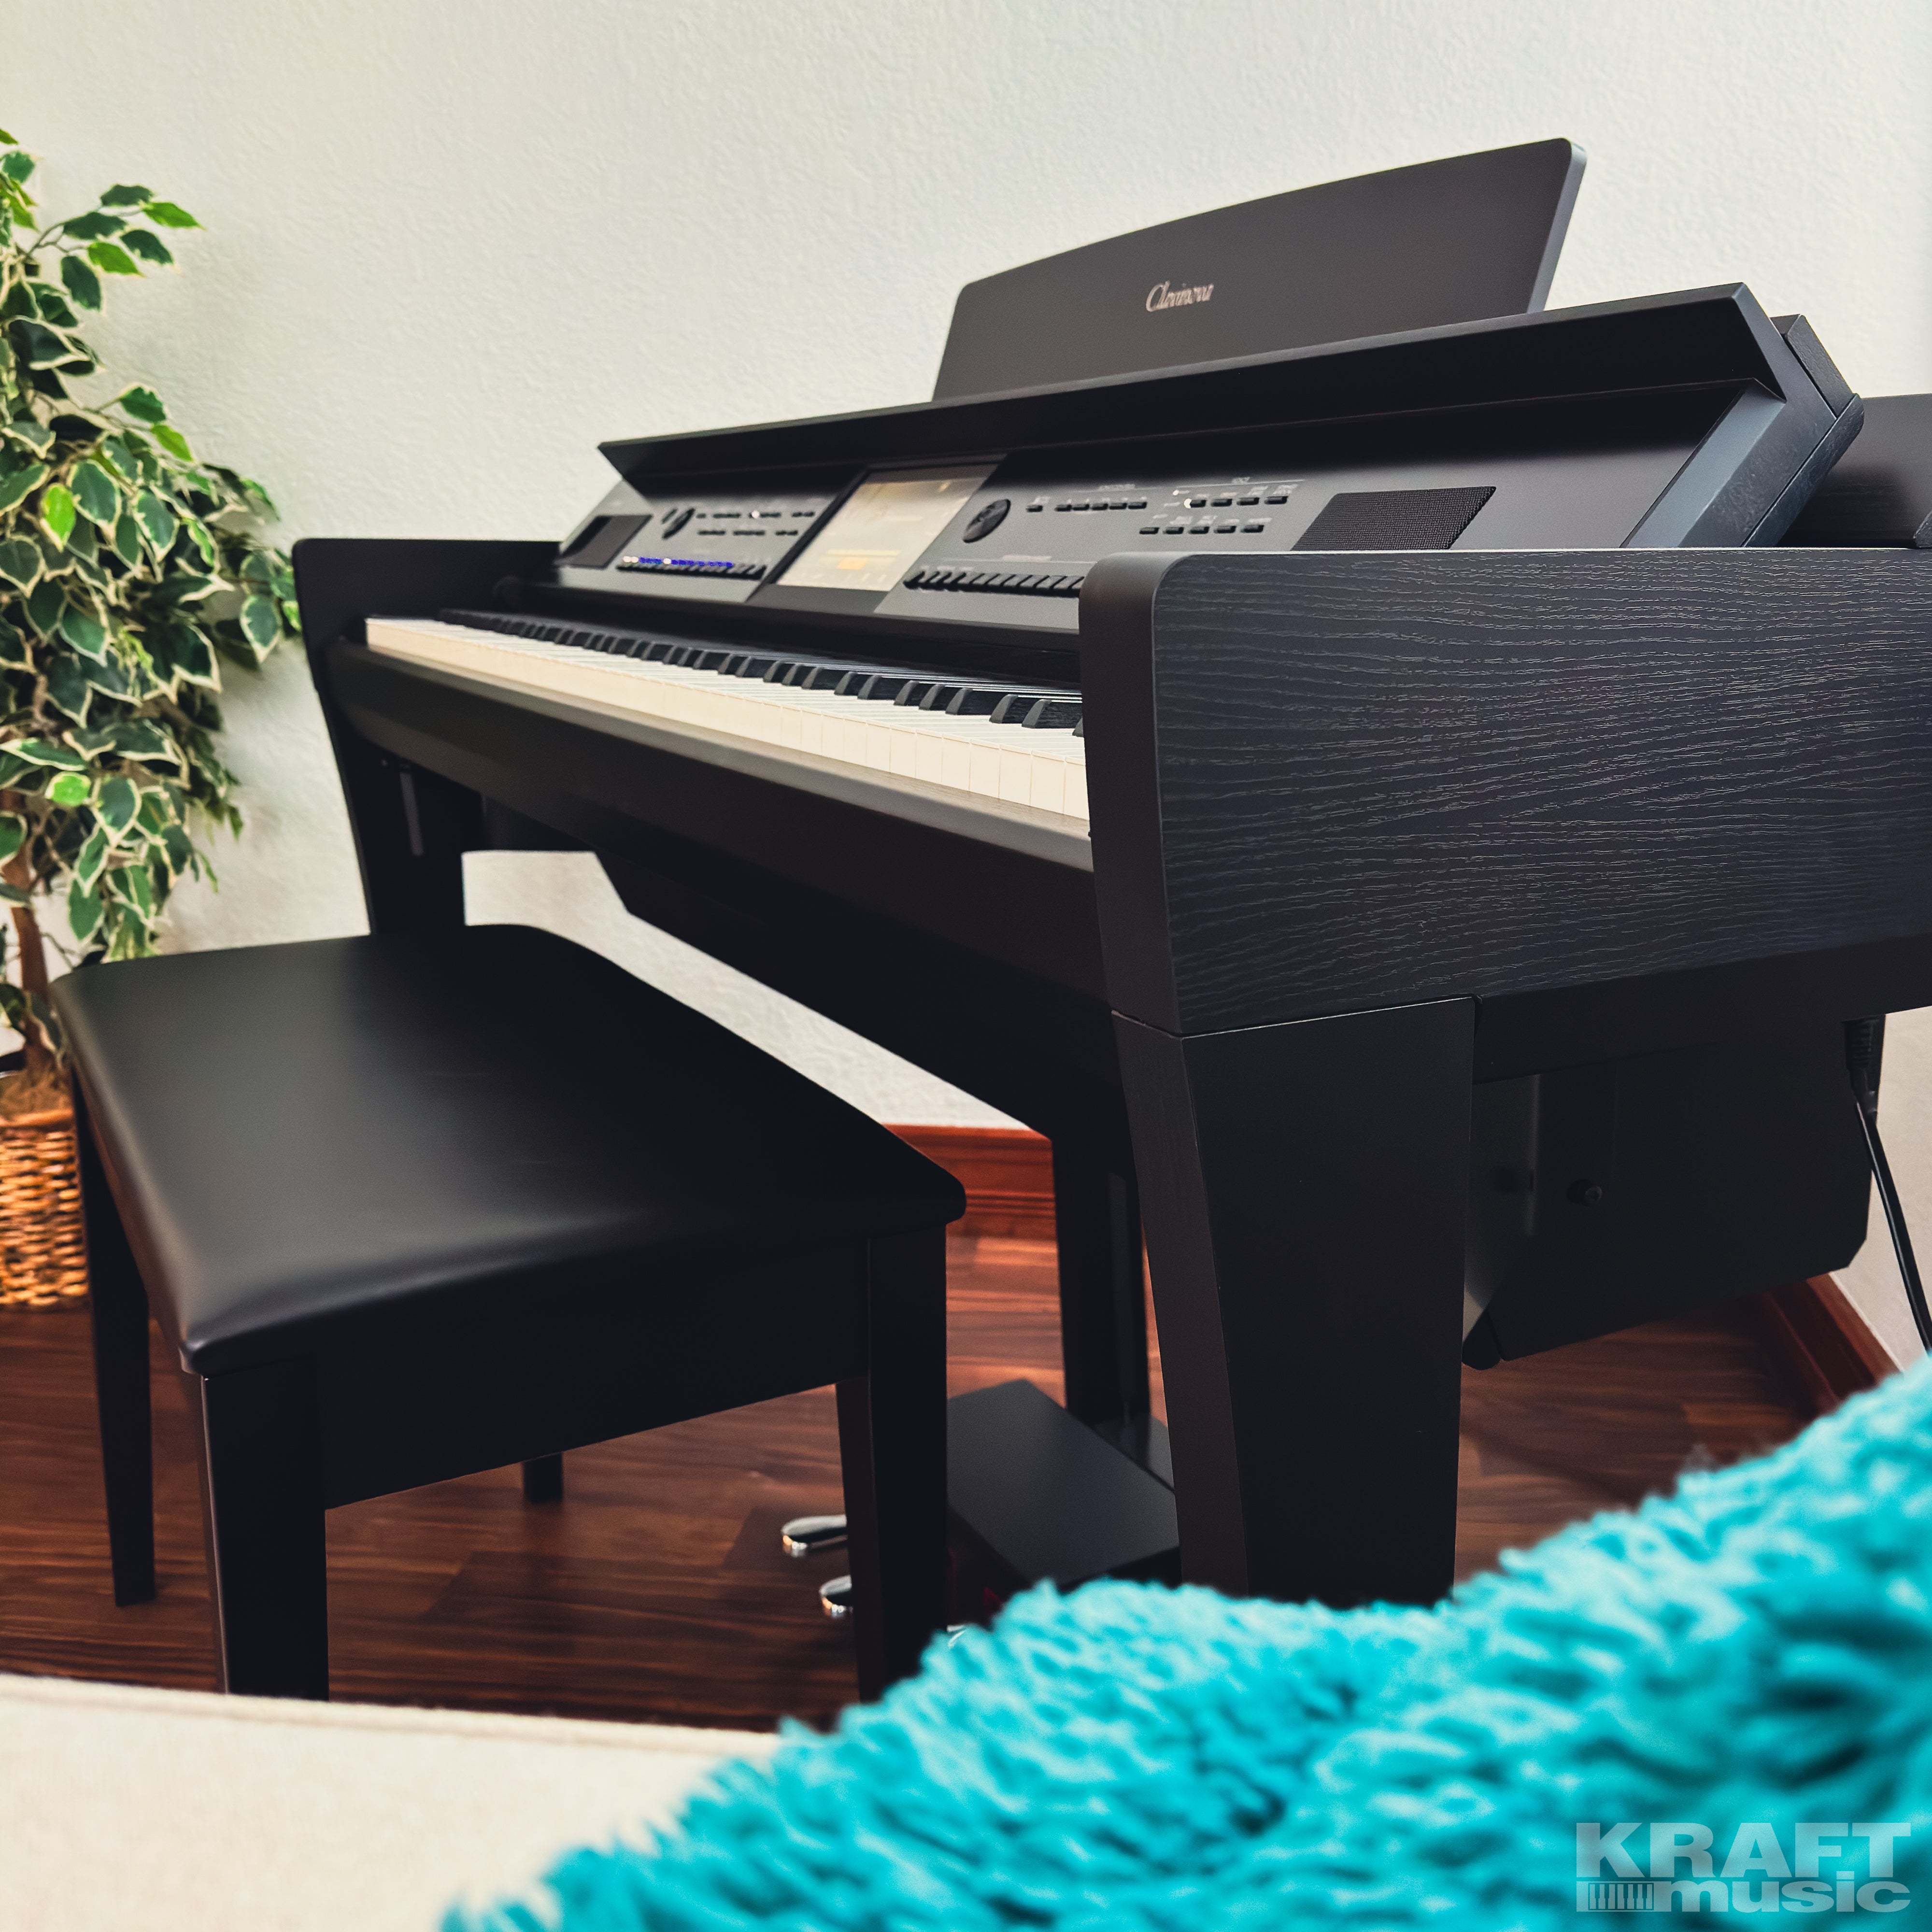 Yamaha Clavinova CVP-909 Digital Piano - Matte Black - in a stylish living room facing left up close